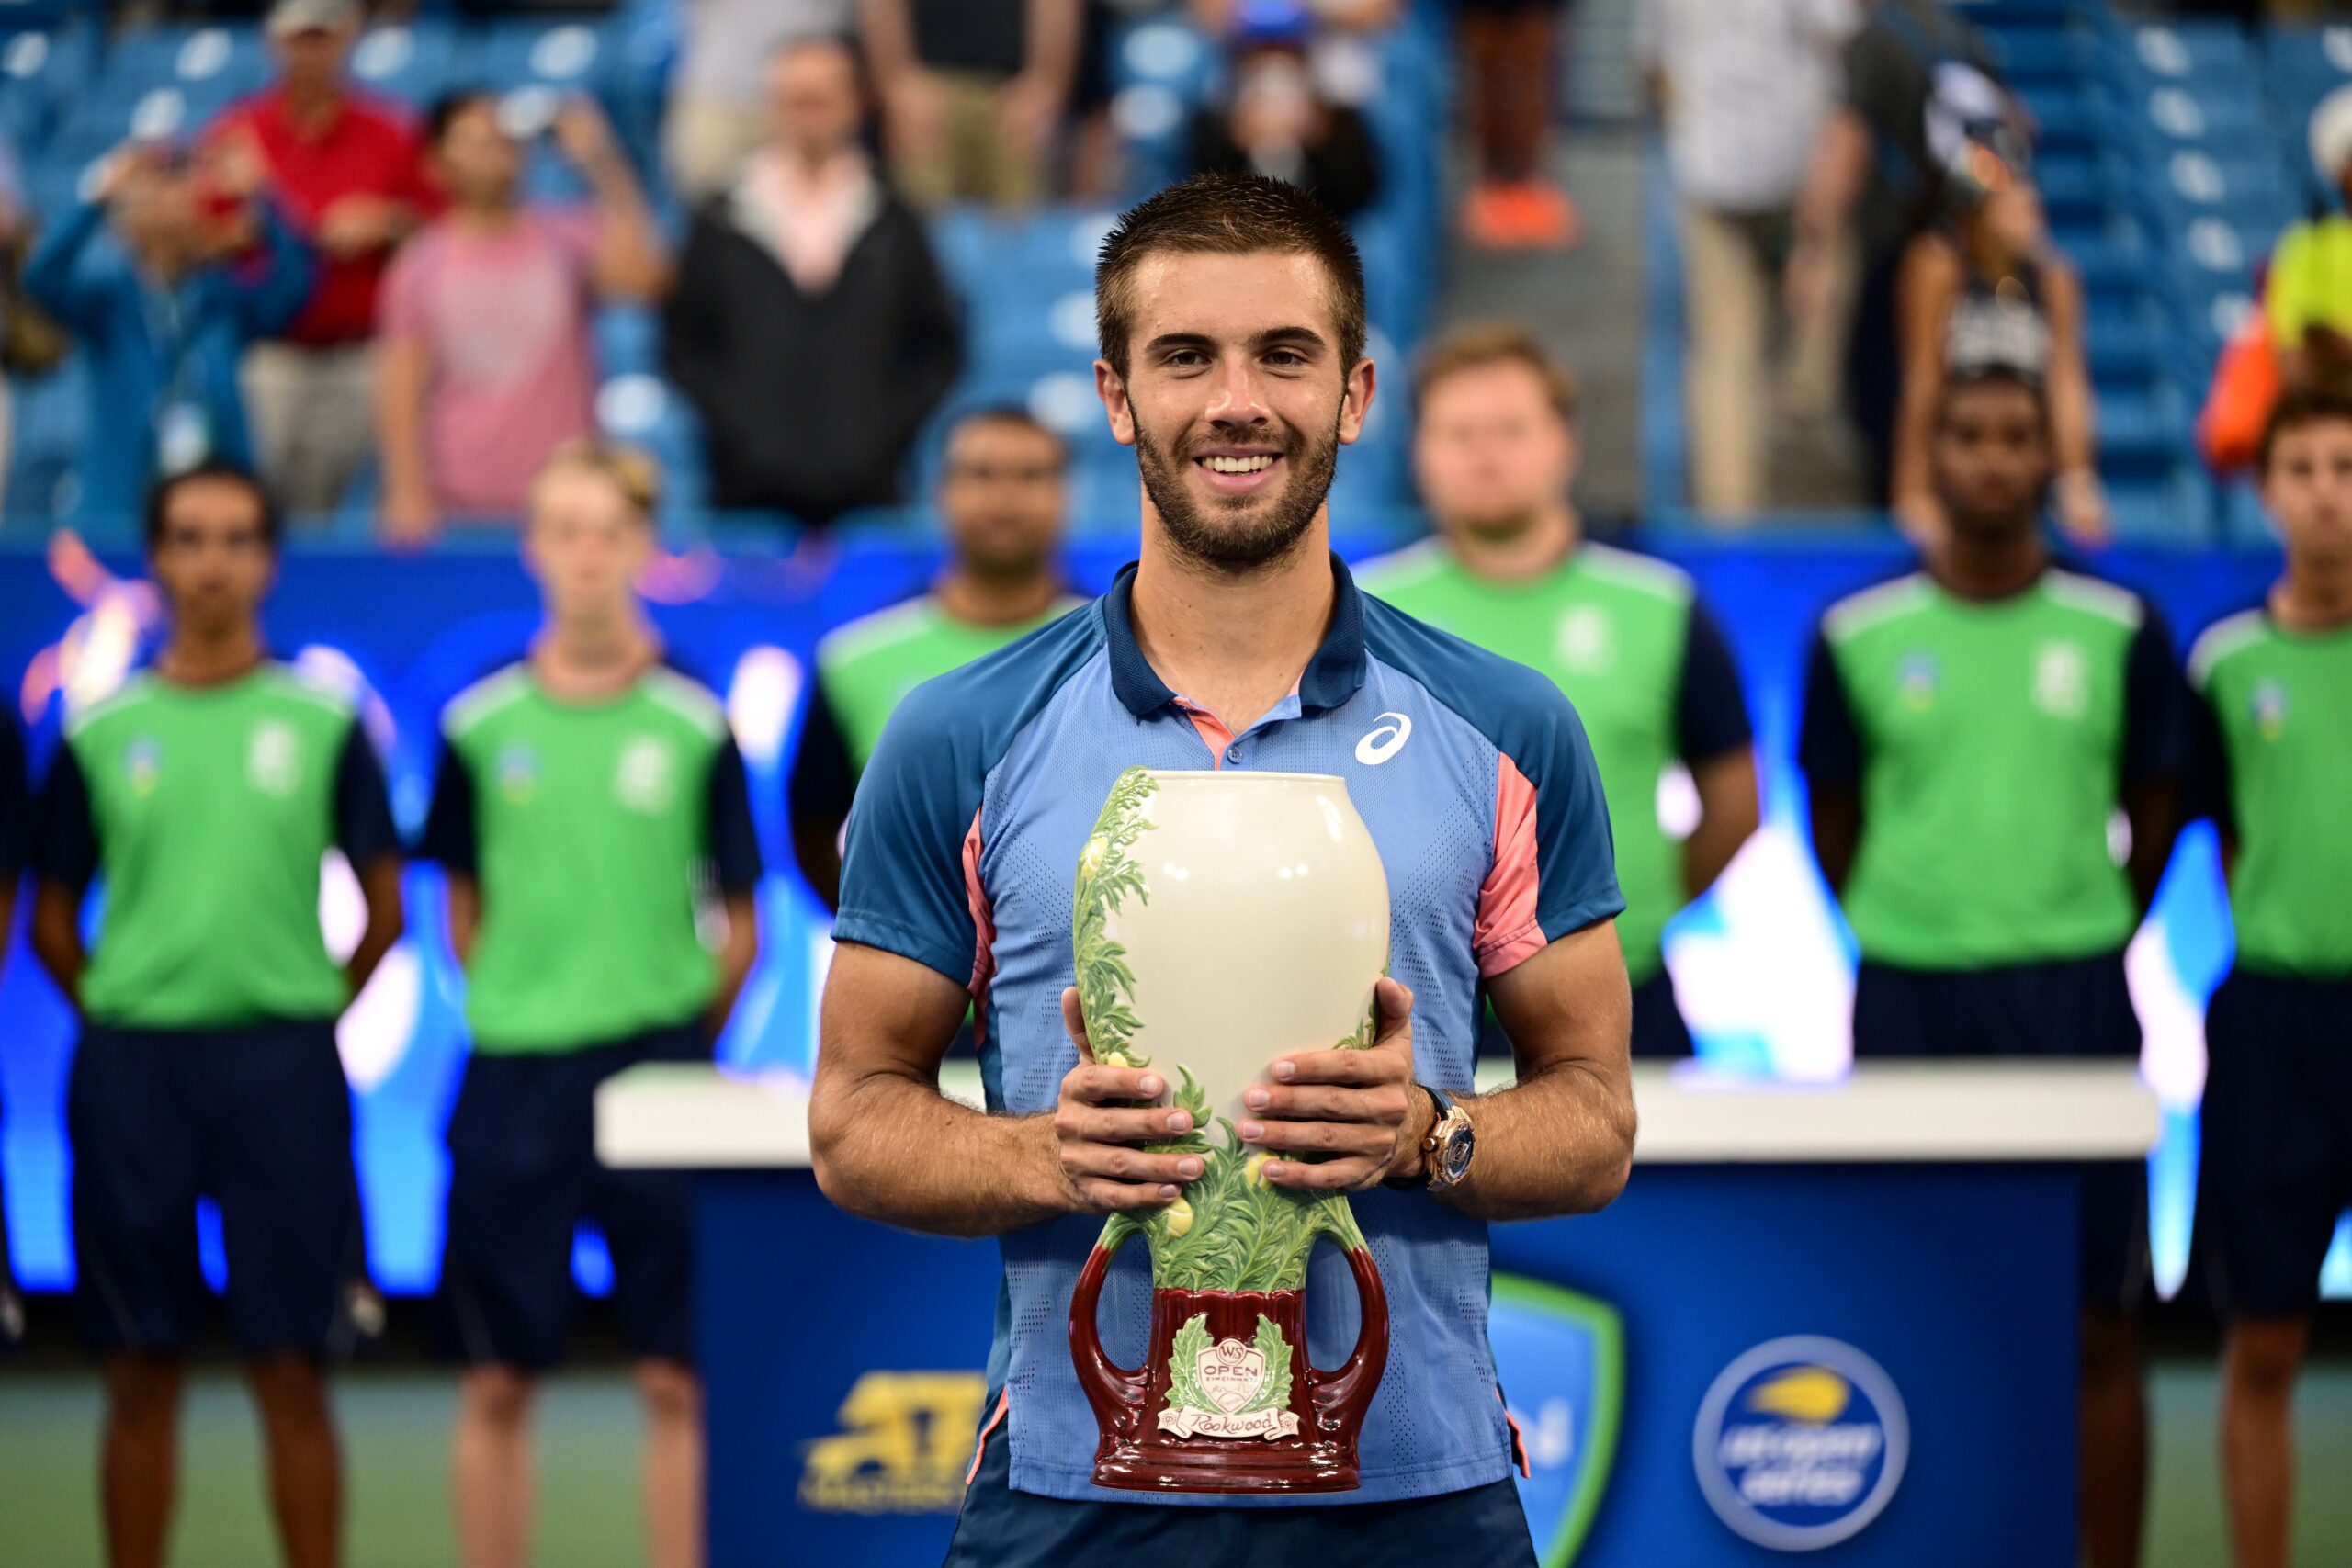 Borna Coric holding men's singles championship trophy on center court